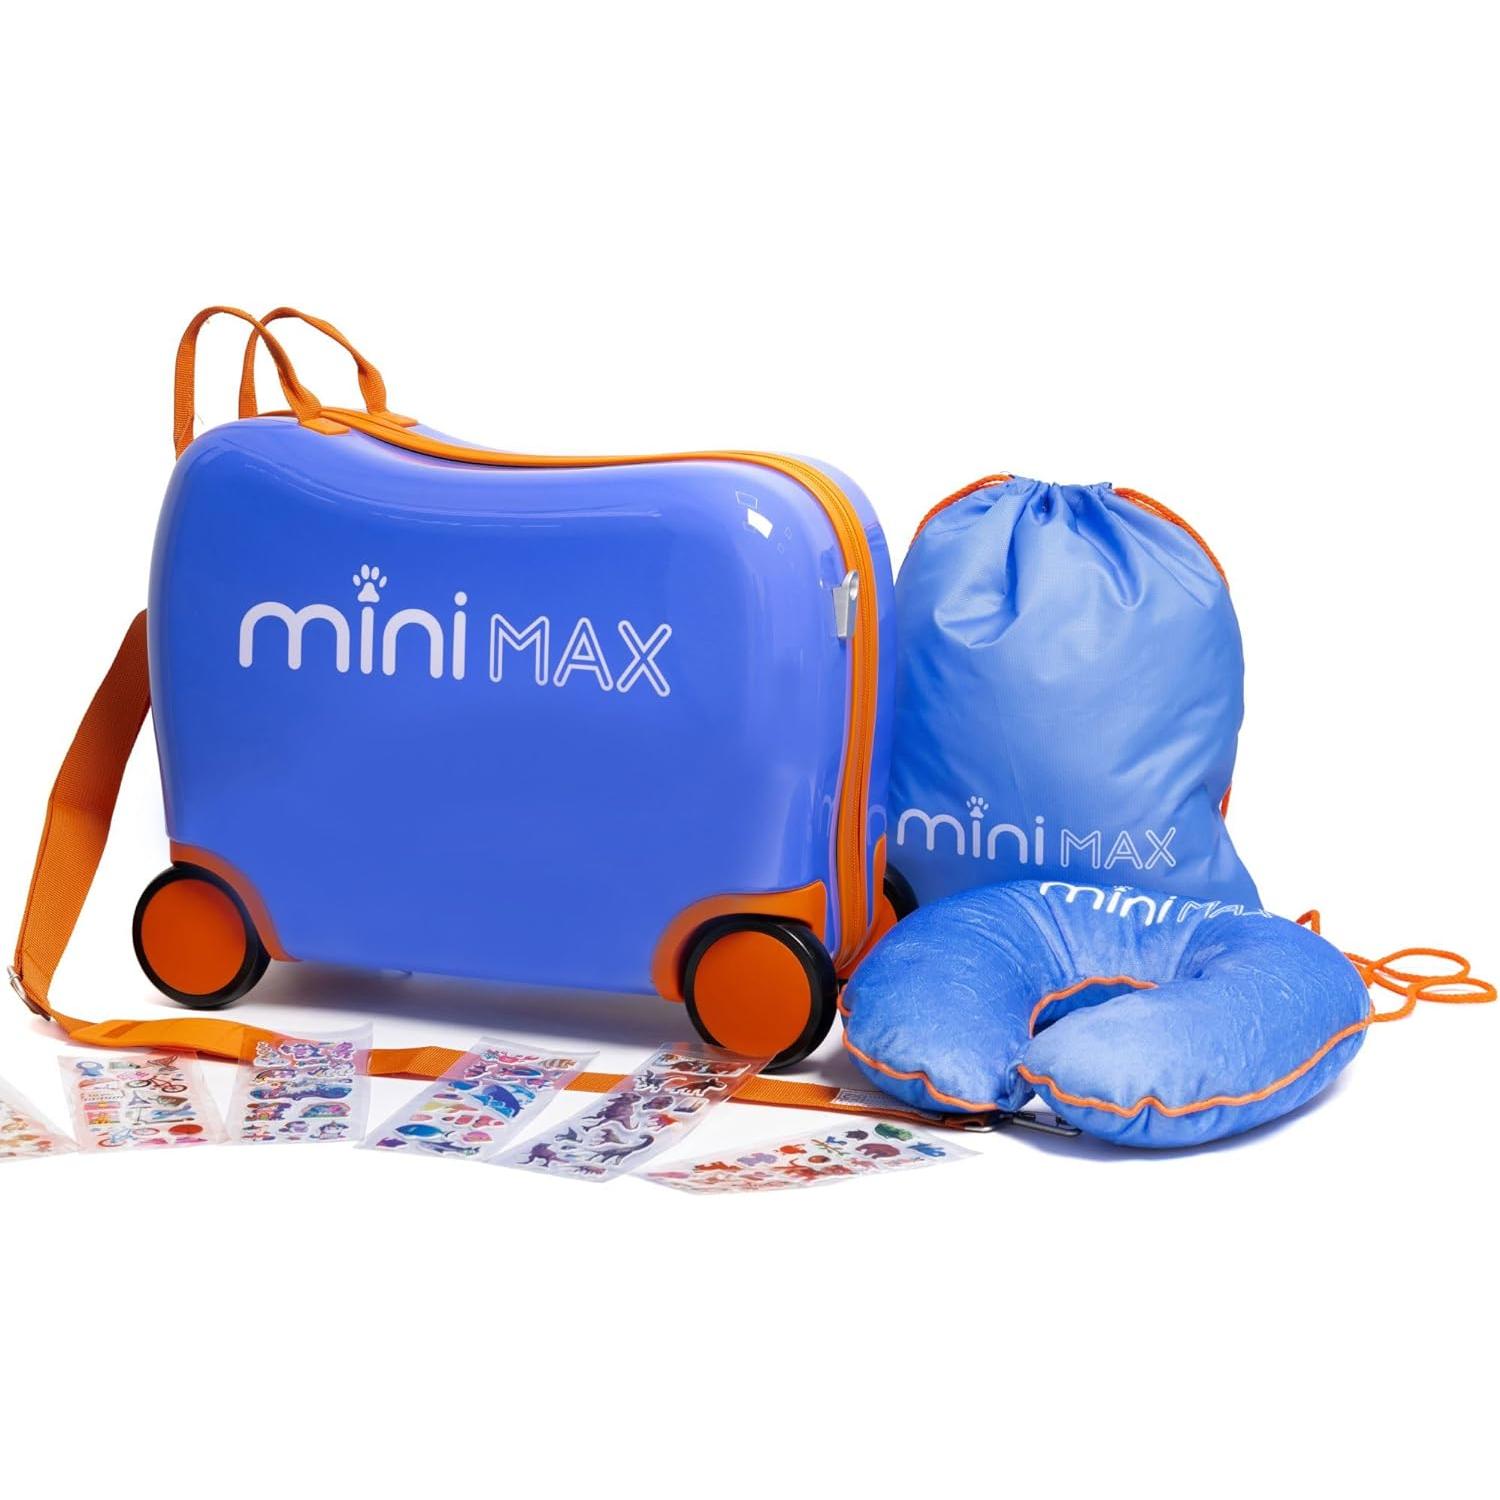 Aerolite MiniMax Childrens Ride-On Suitcase Fits 45x36x20cm EasyJet Maximum Size Kids Hand Luggage With Wheels 29L - Blue